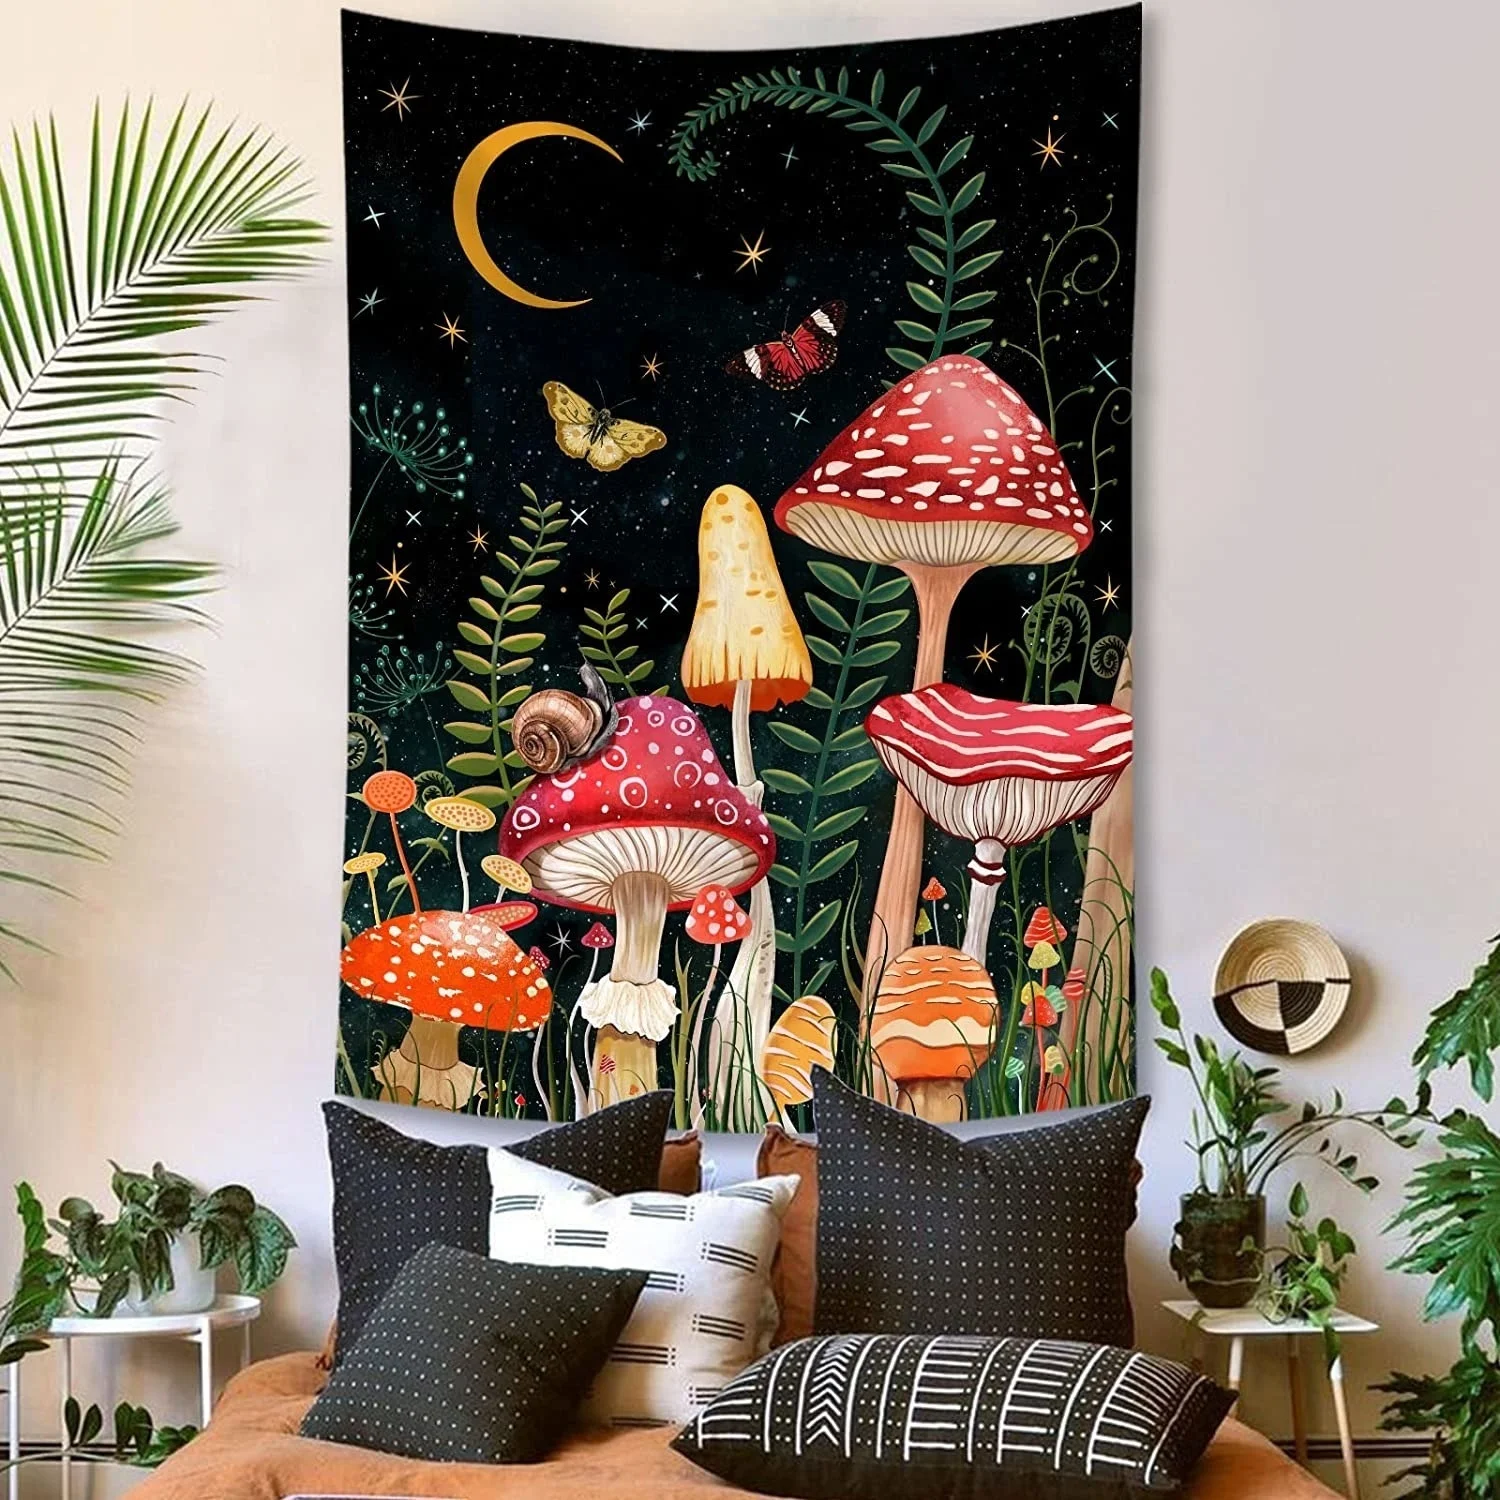 

Mushroom Moon Star Tapestry Bohemian Floral Plants Upright Aesthetic Wall Hanging Tapestries For Bedroom Black Carpet Boho Decor